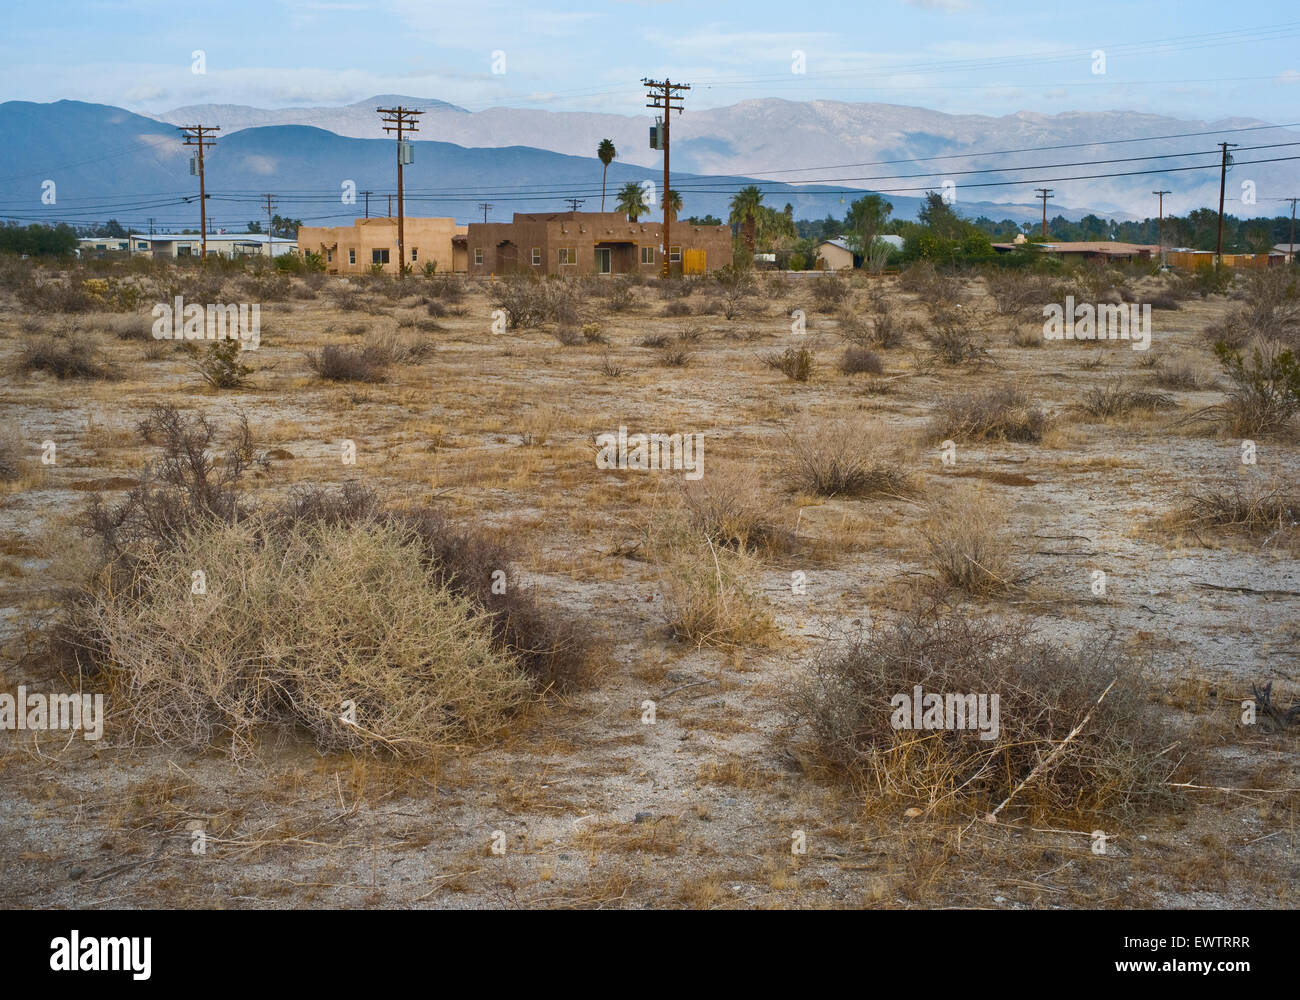 Adobe Stil Häuser in Colorado Wüste in Südkalifornien. Stockfoto